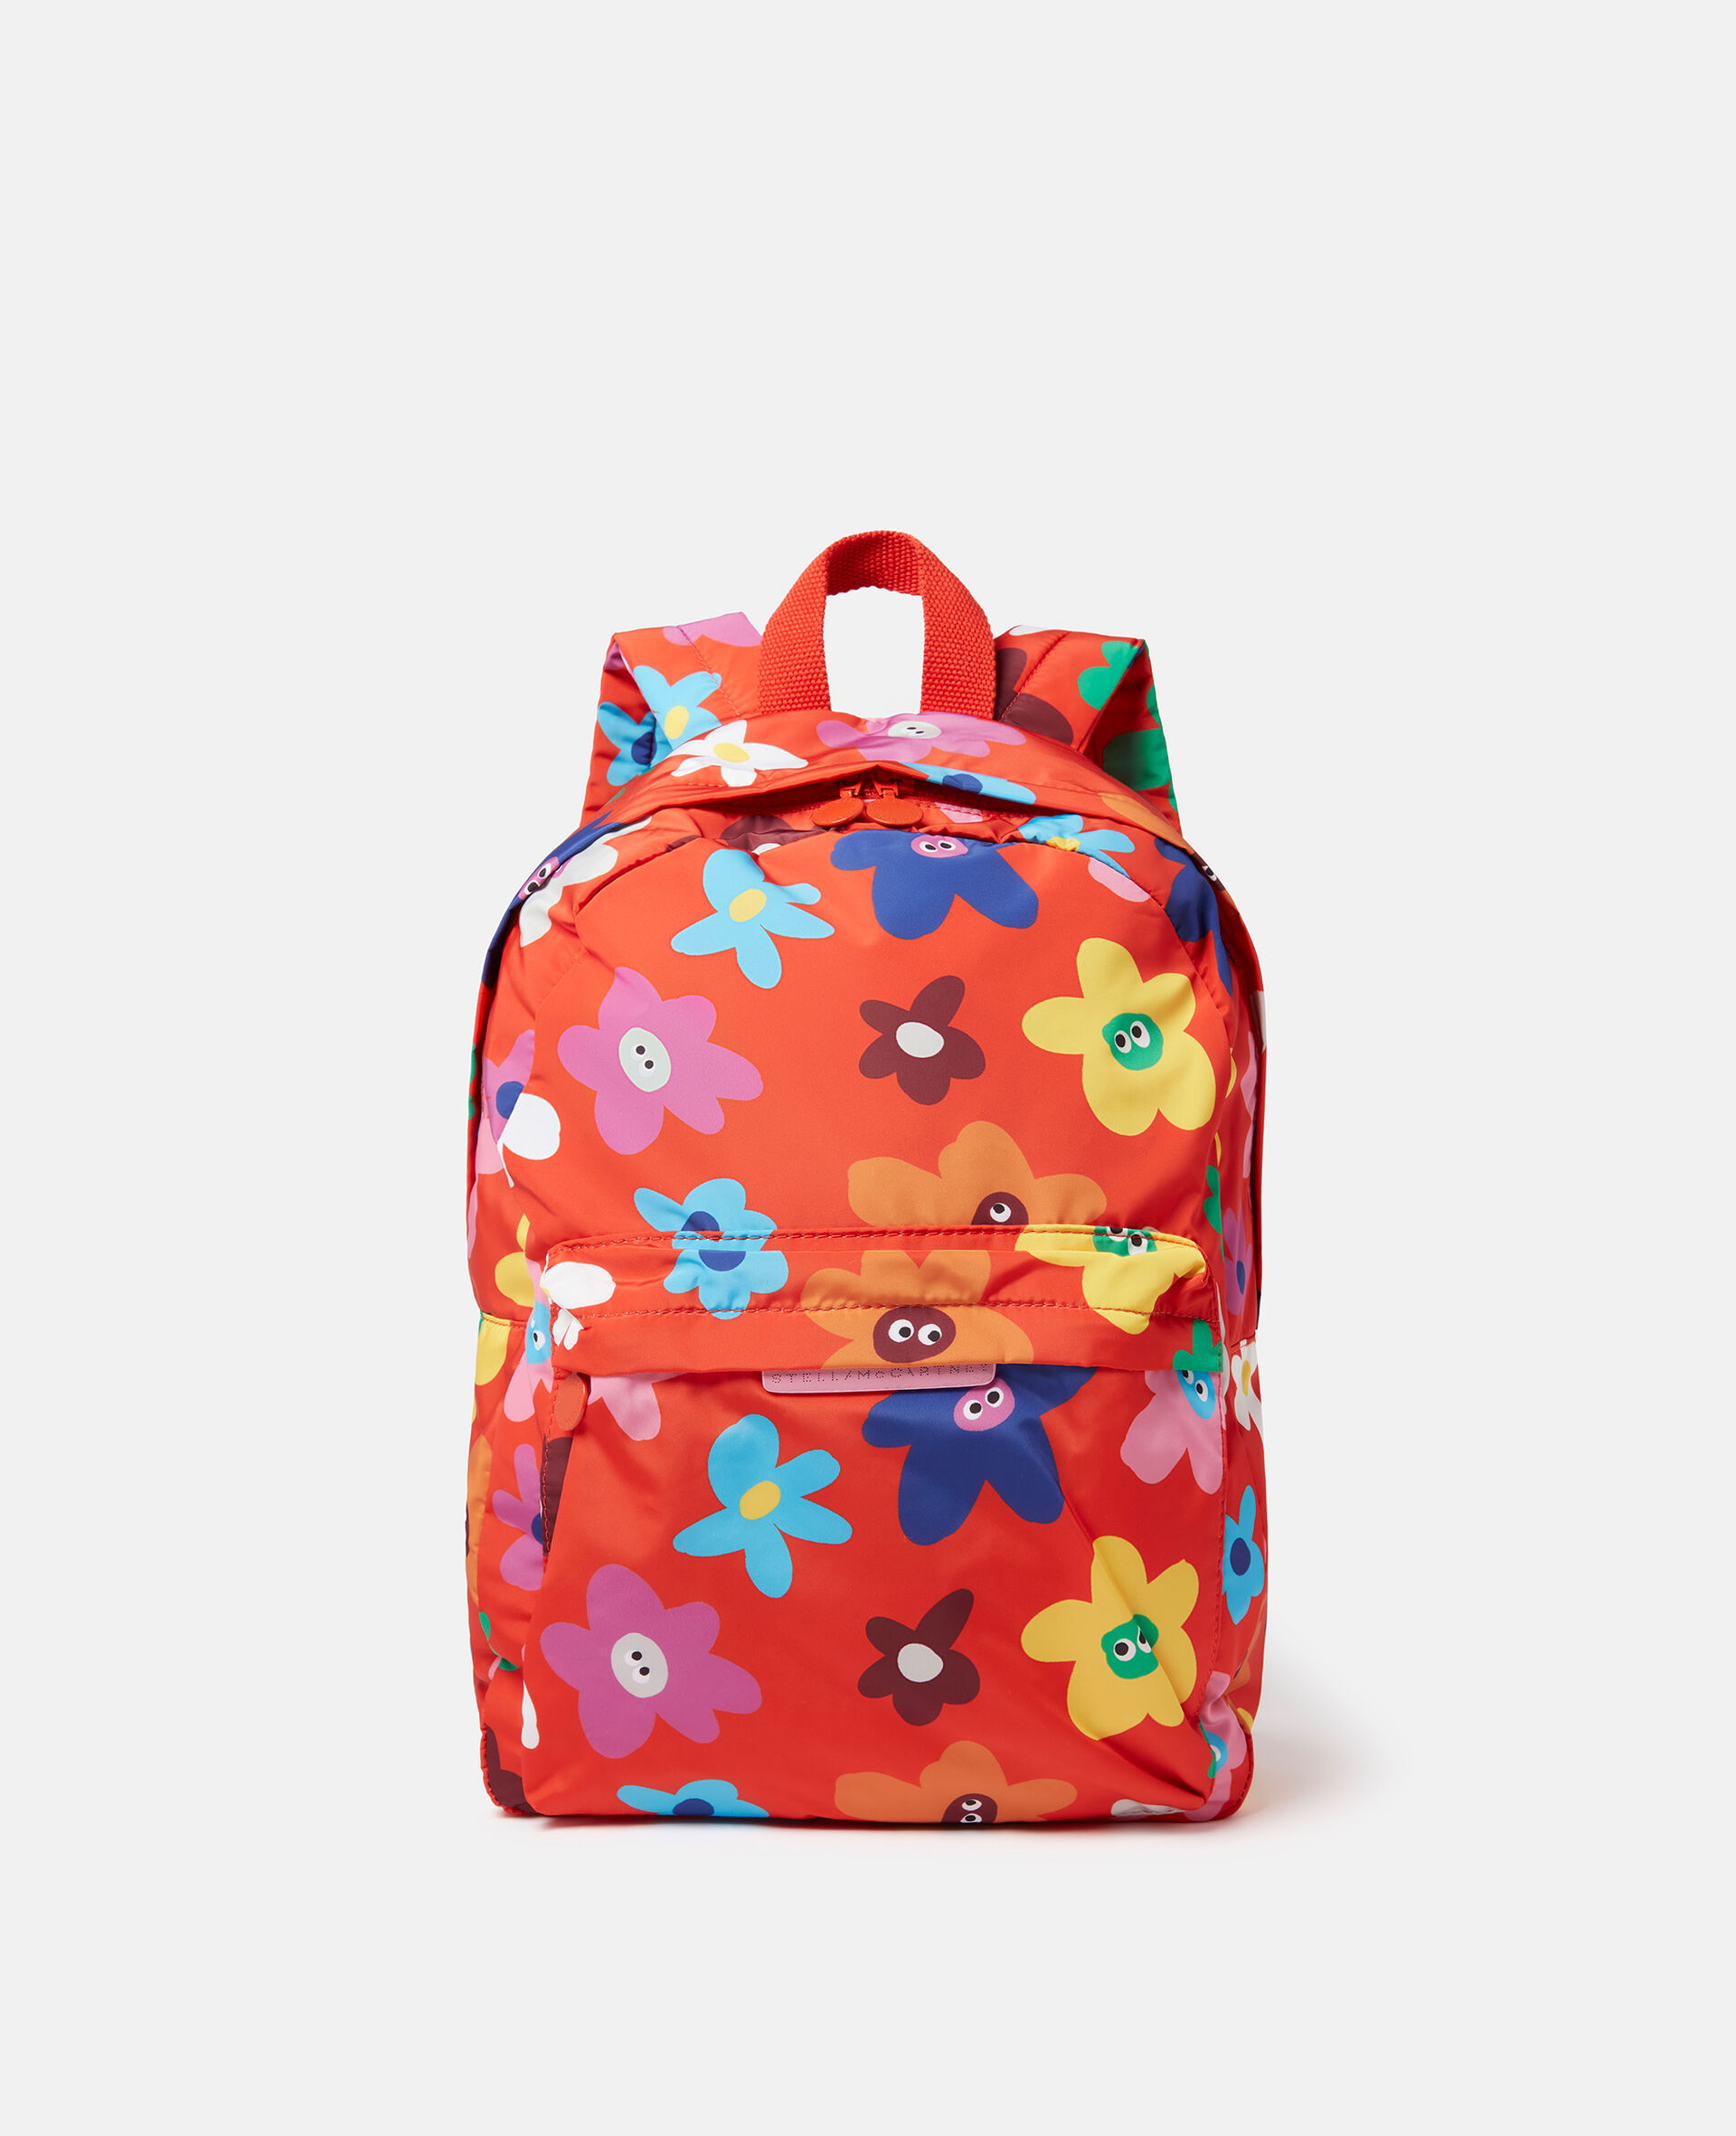 Smiling Flower Print Backpack-Multicolour-large image number 0